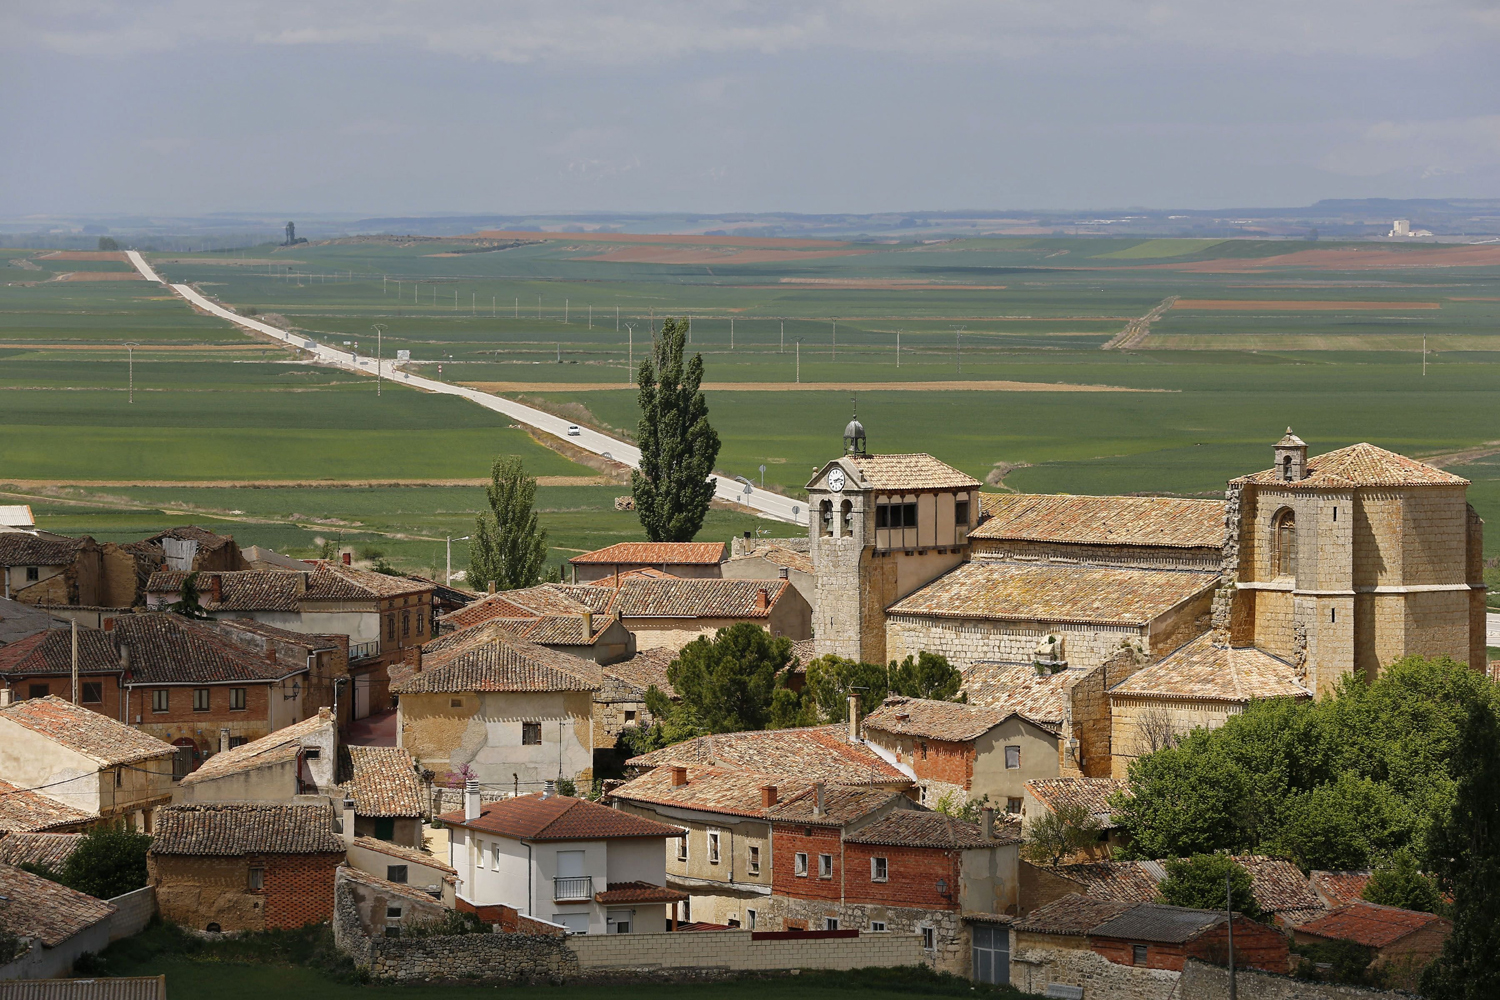 Spanish town of Castrillo Matajudios, near Burgos, April 21, 2014.